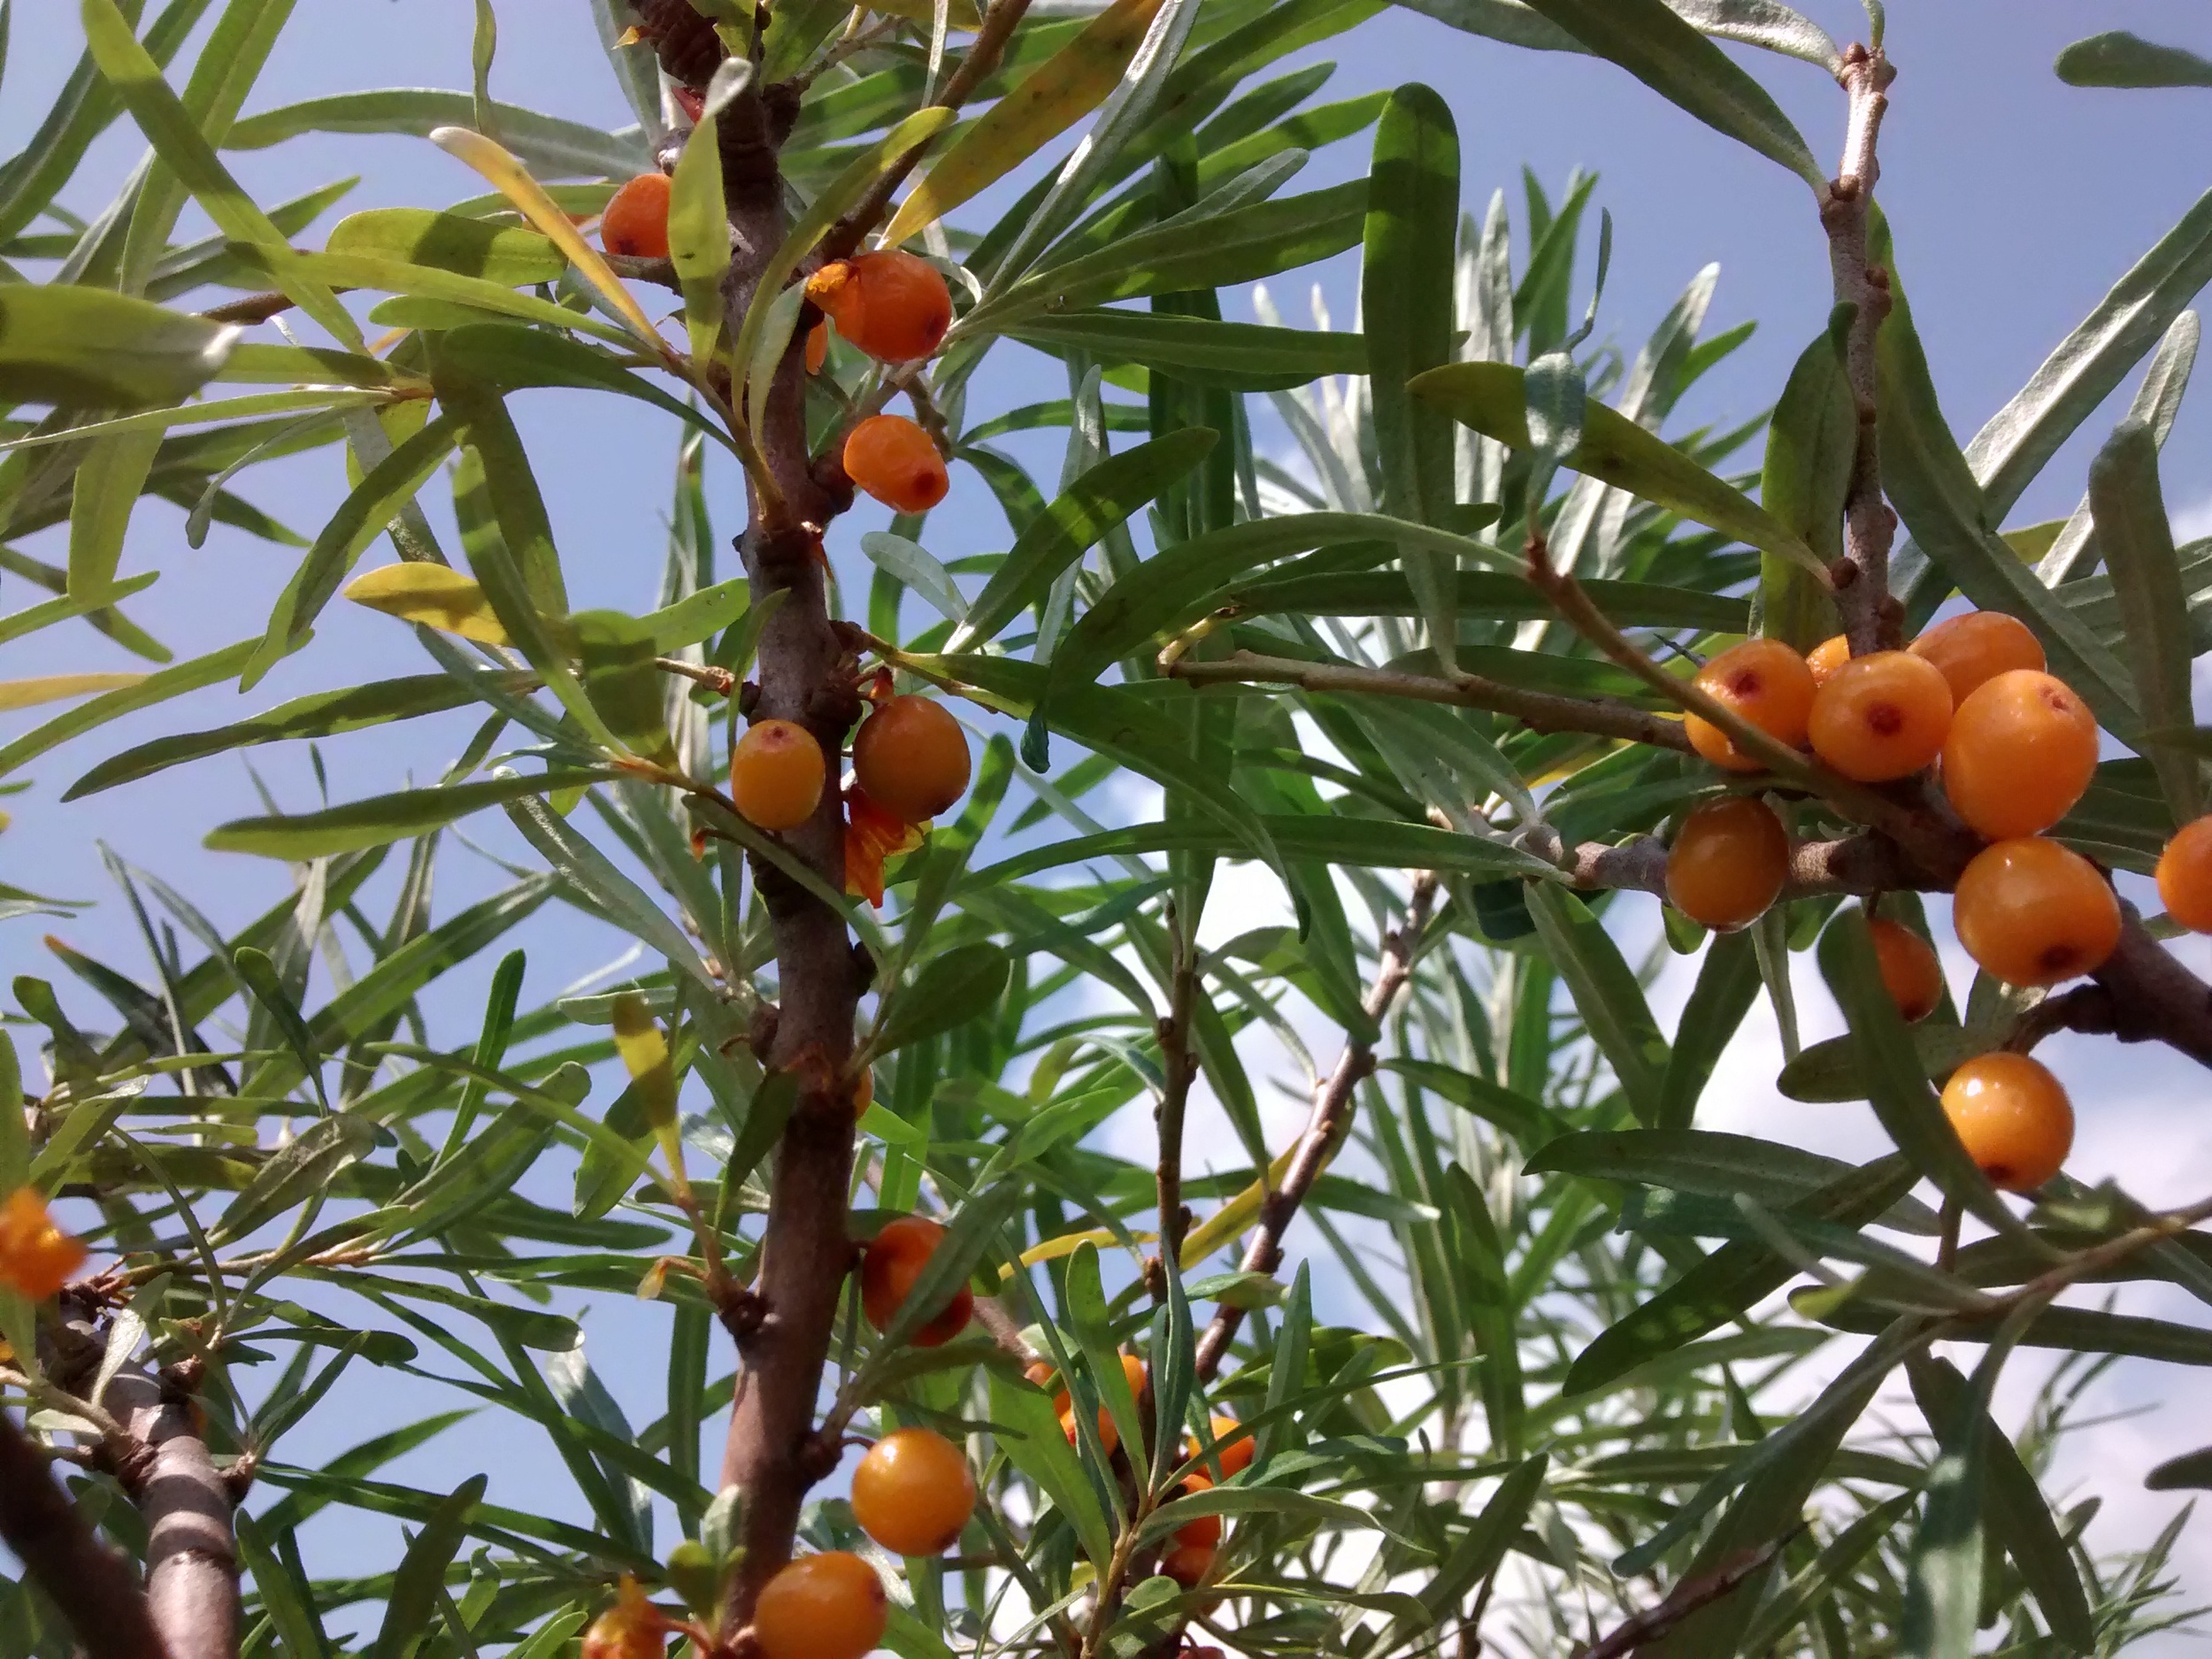 Seaberry fruit, August 2014 - orange is the new orange